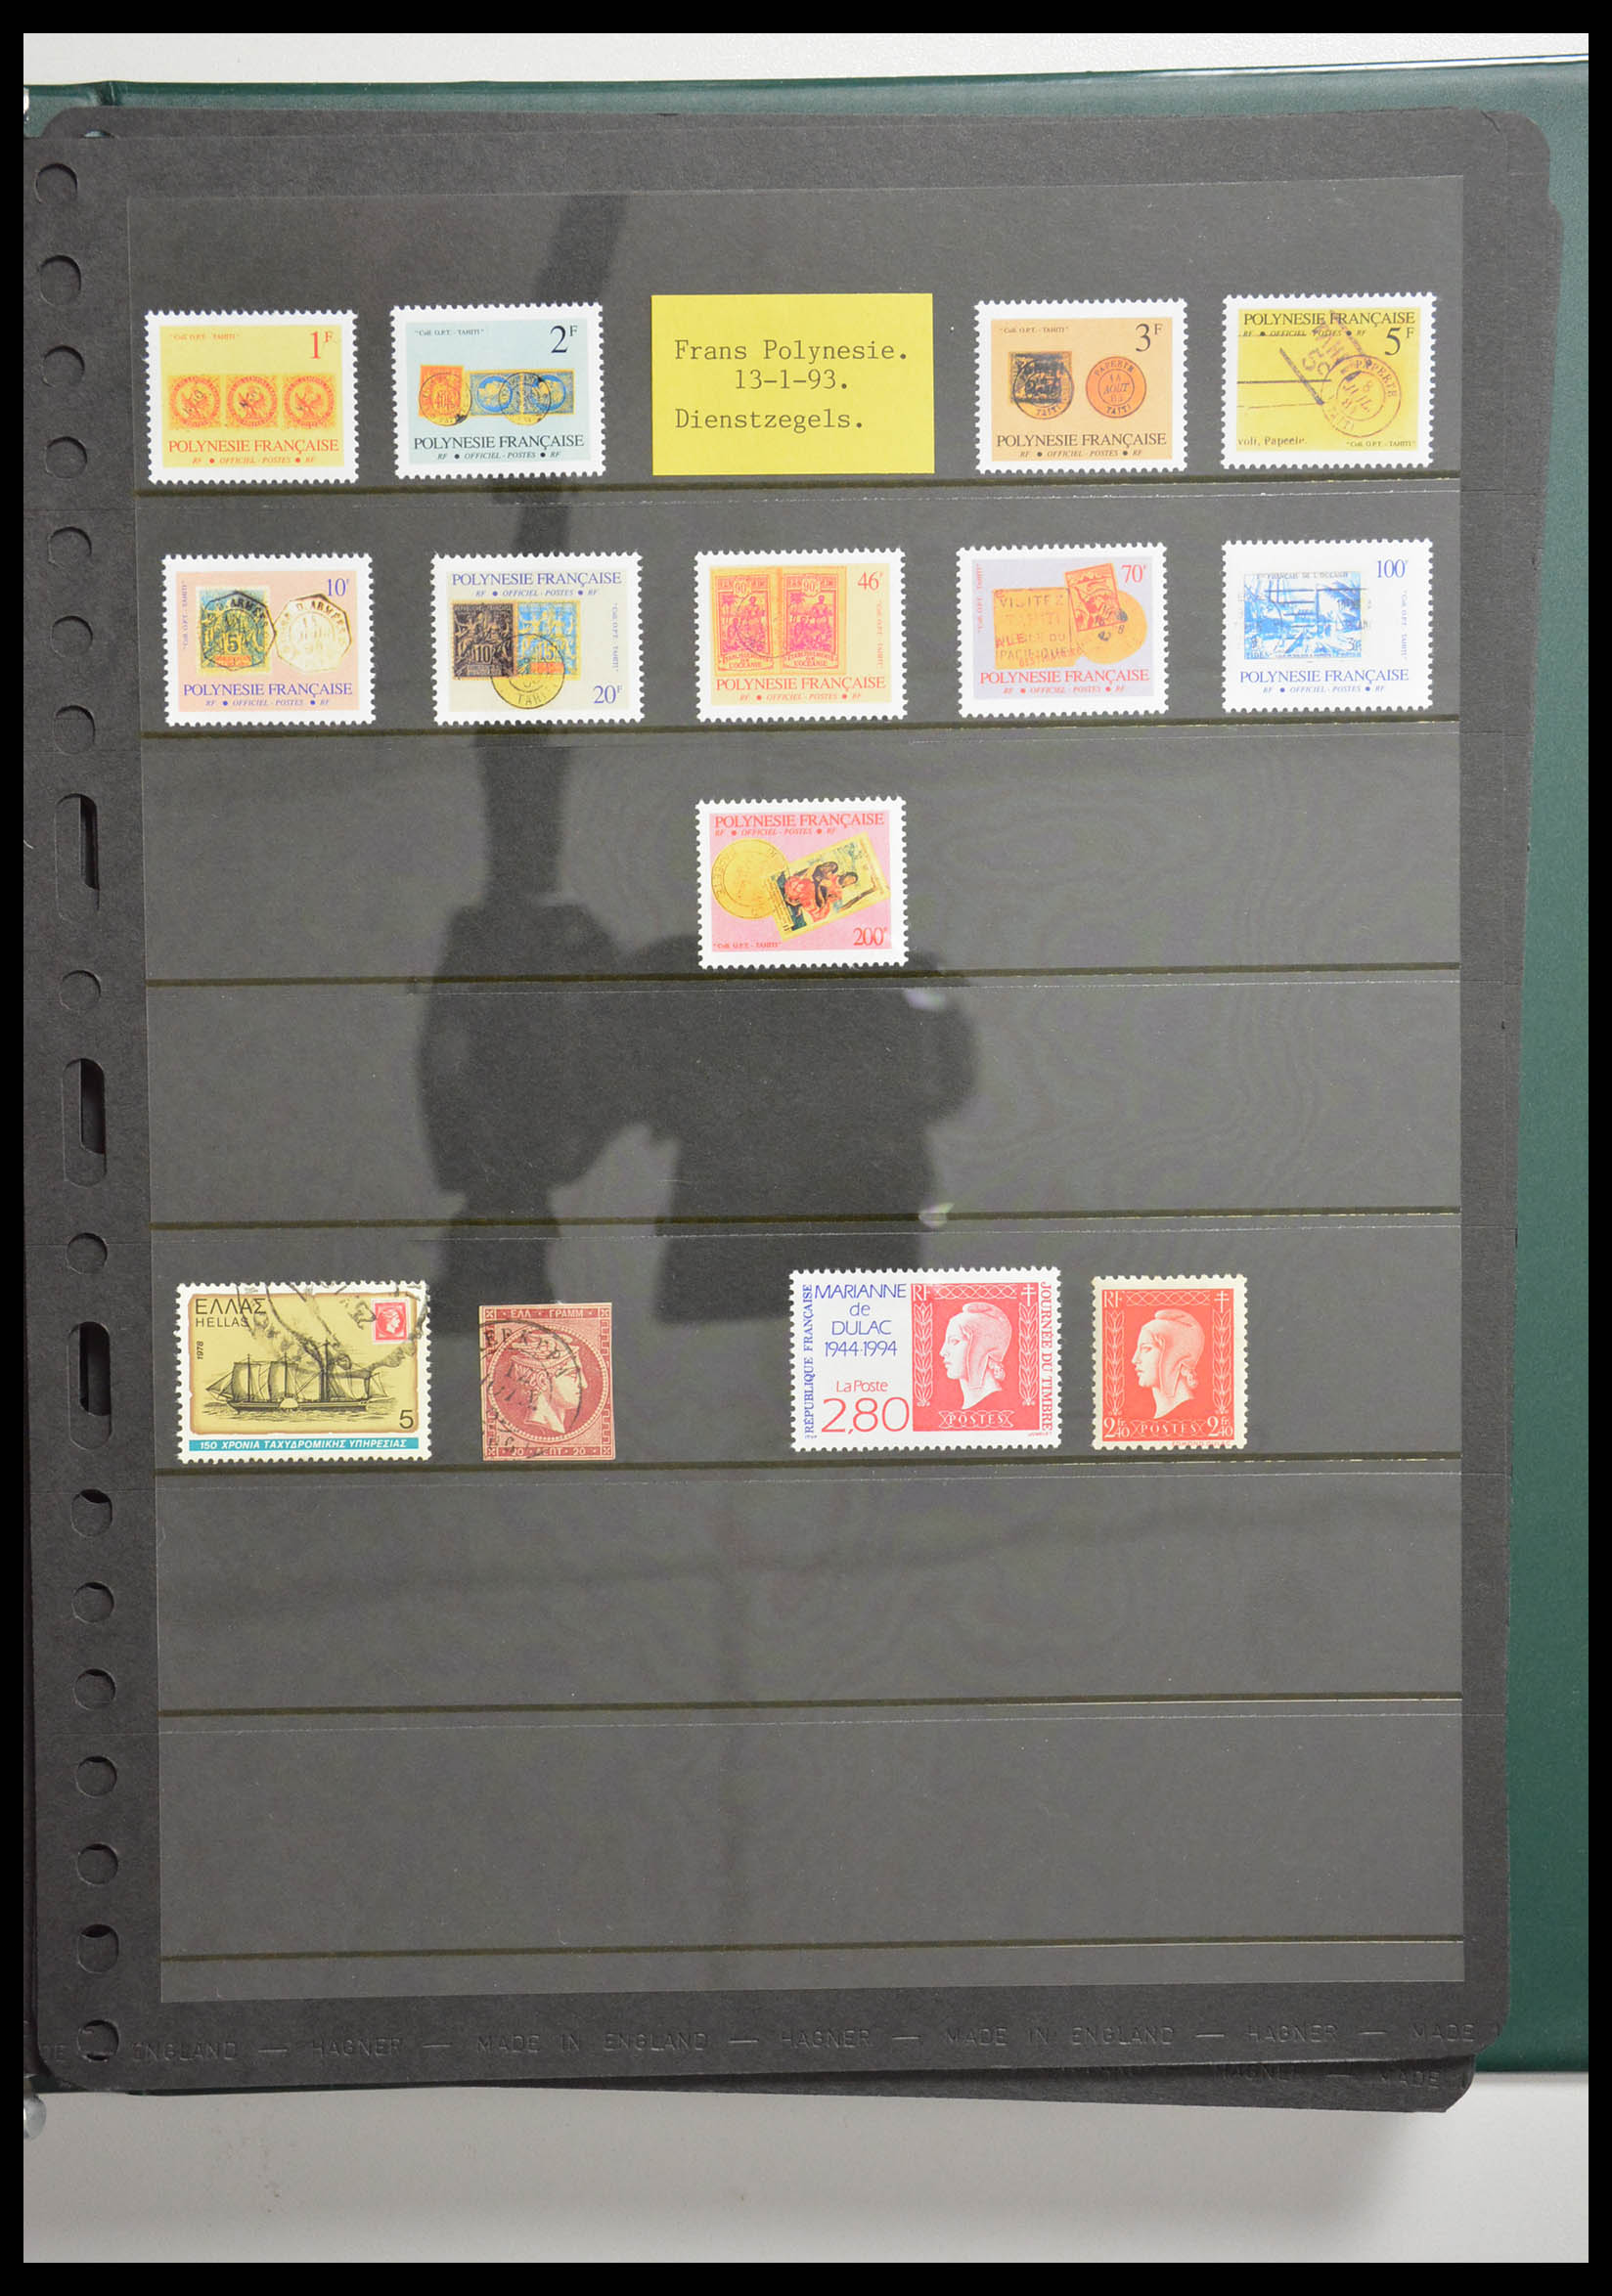 28337 004 - 28337 Postzegel op postzegel 1840-2001.